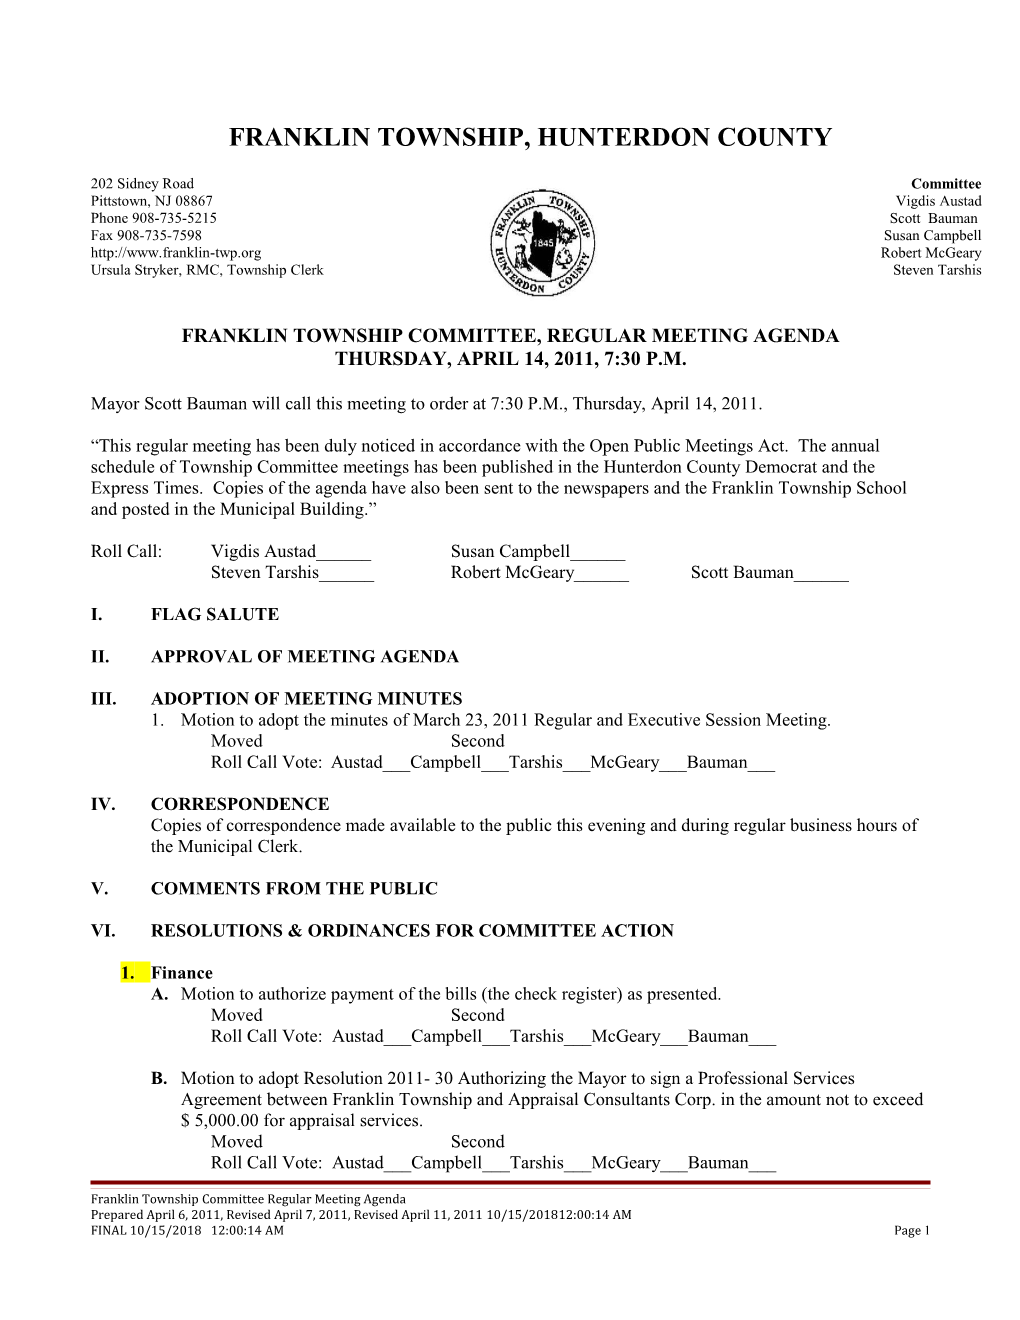 Franklin Township Committee, Regular Meeting Agenda